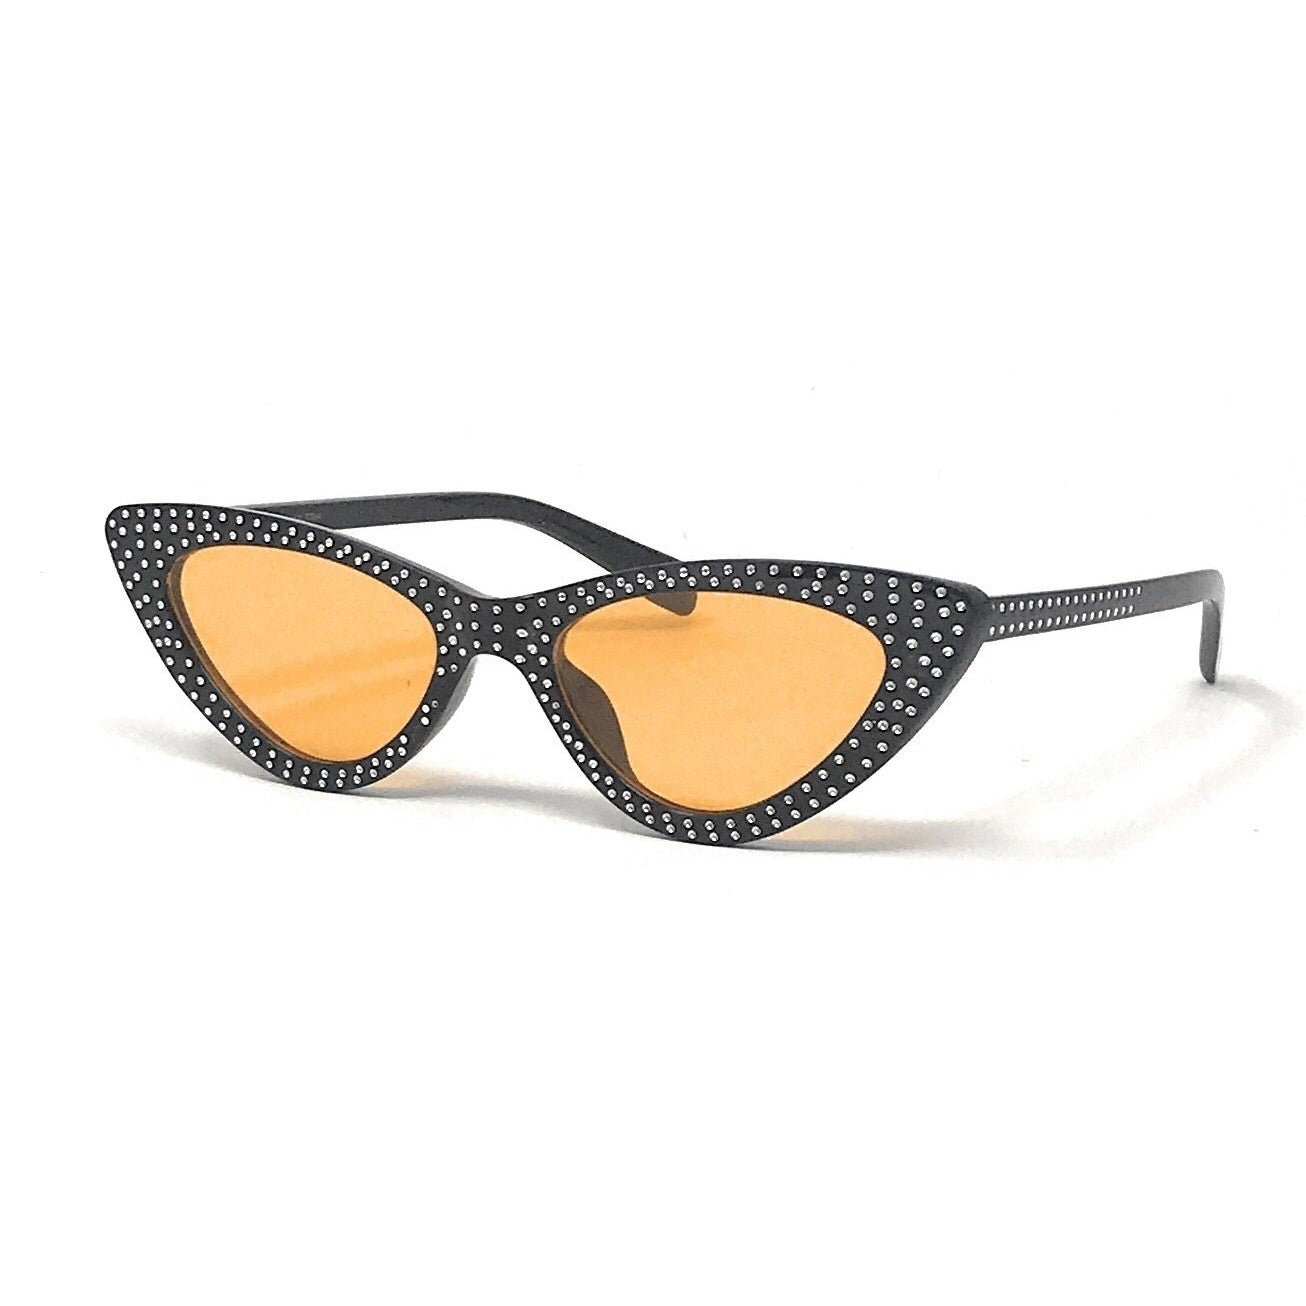 Black and White Polka Dot Orange Lense 1950s Vintage Sunglasses